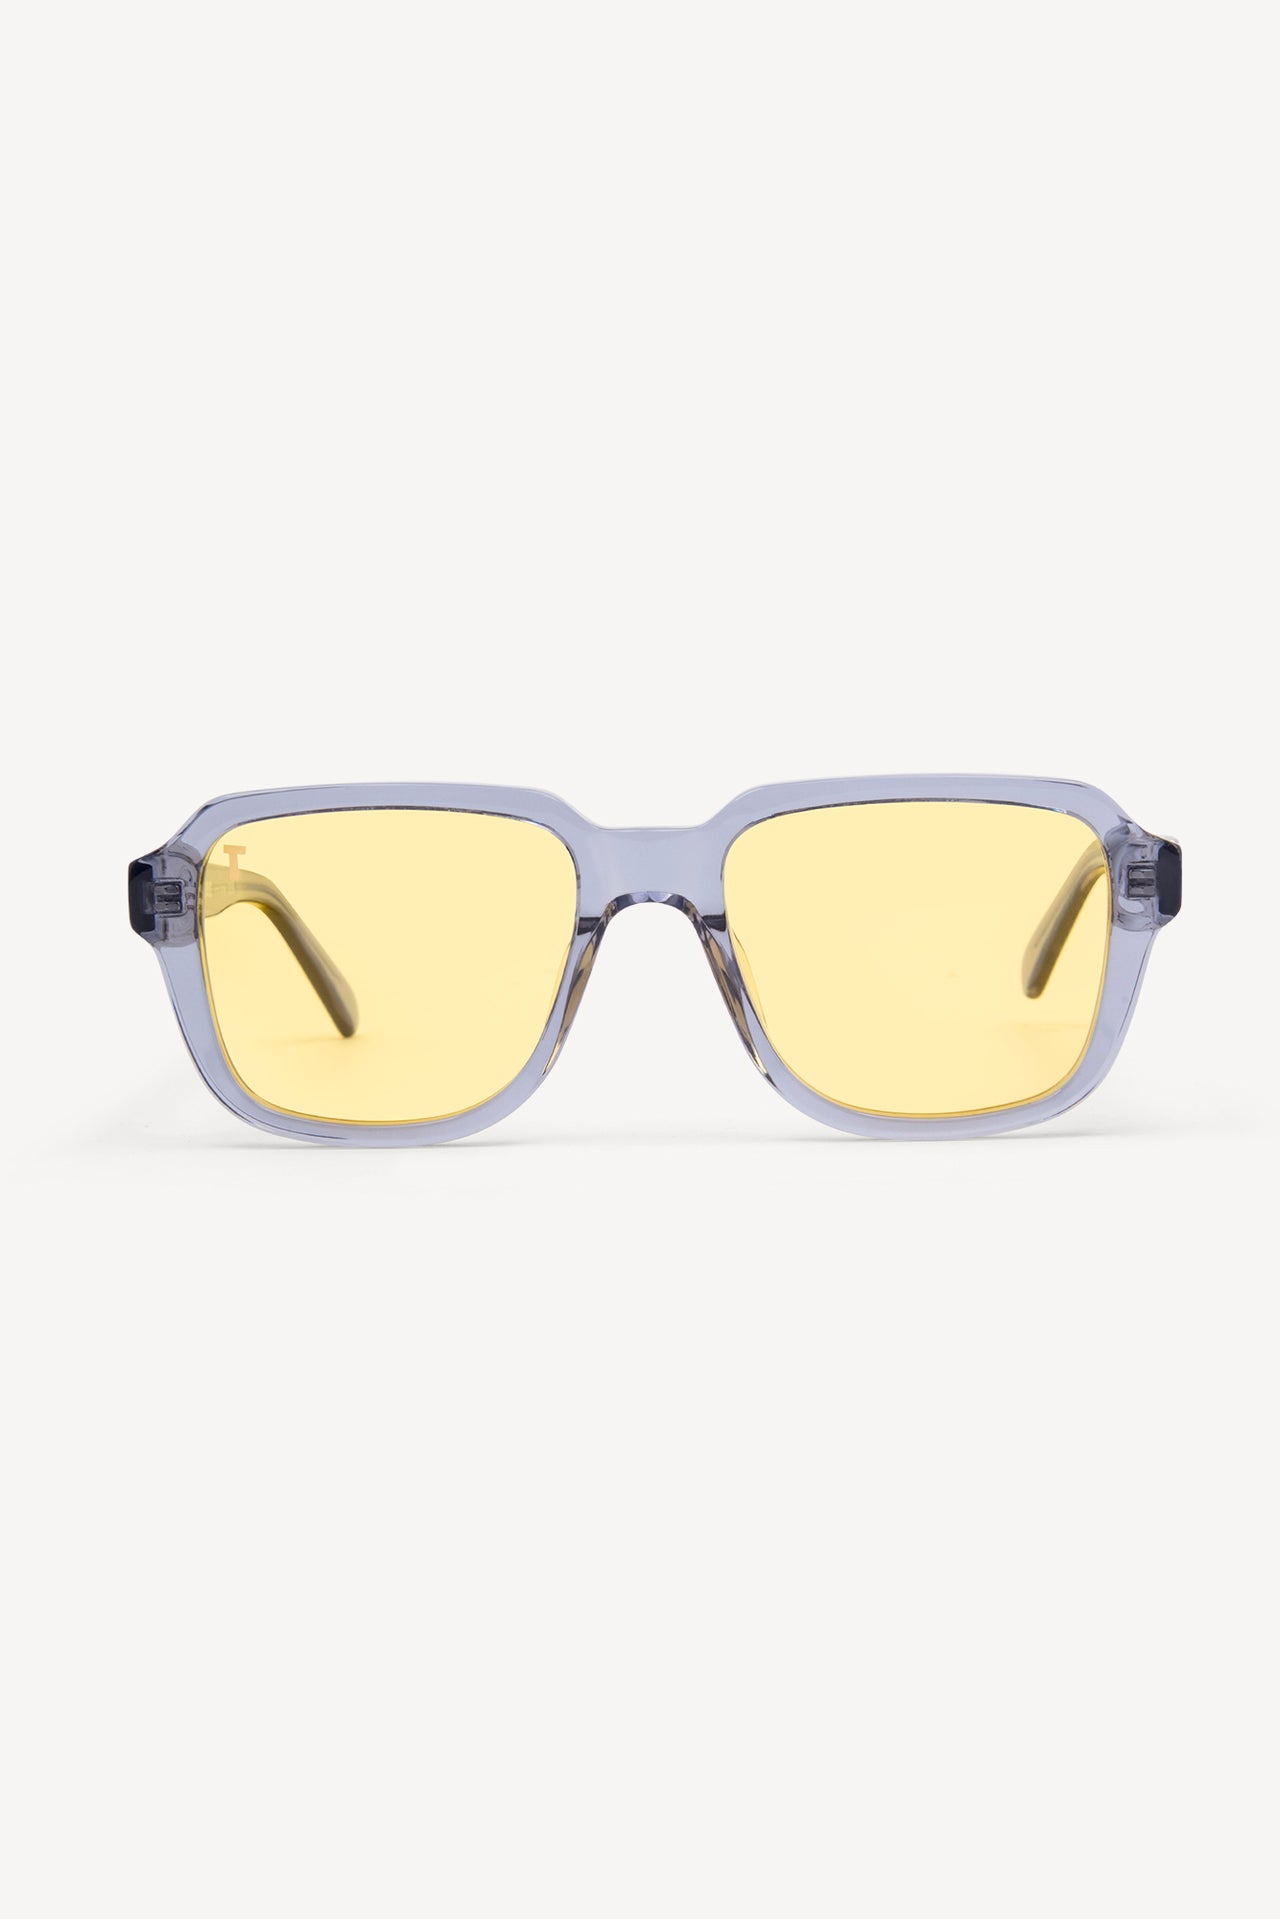 TOATIE Casablanca Square Sunglasses GREY/YELLOW